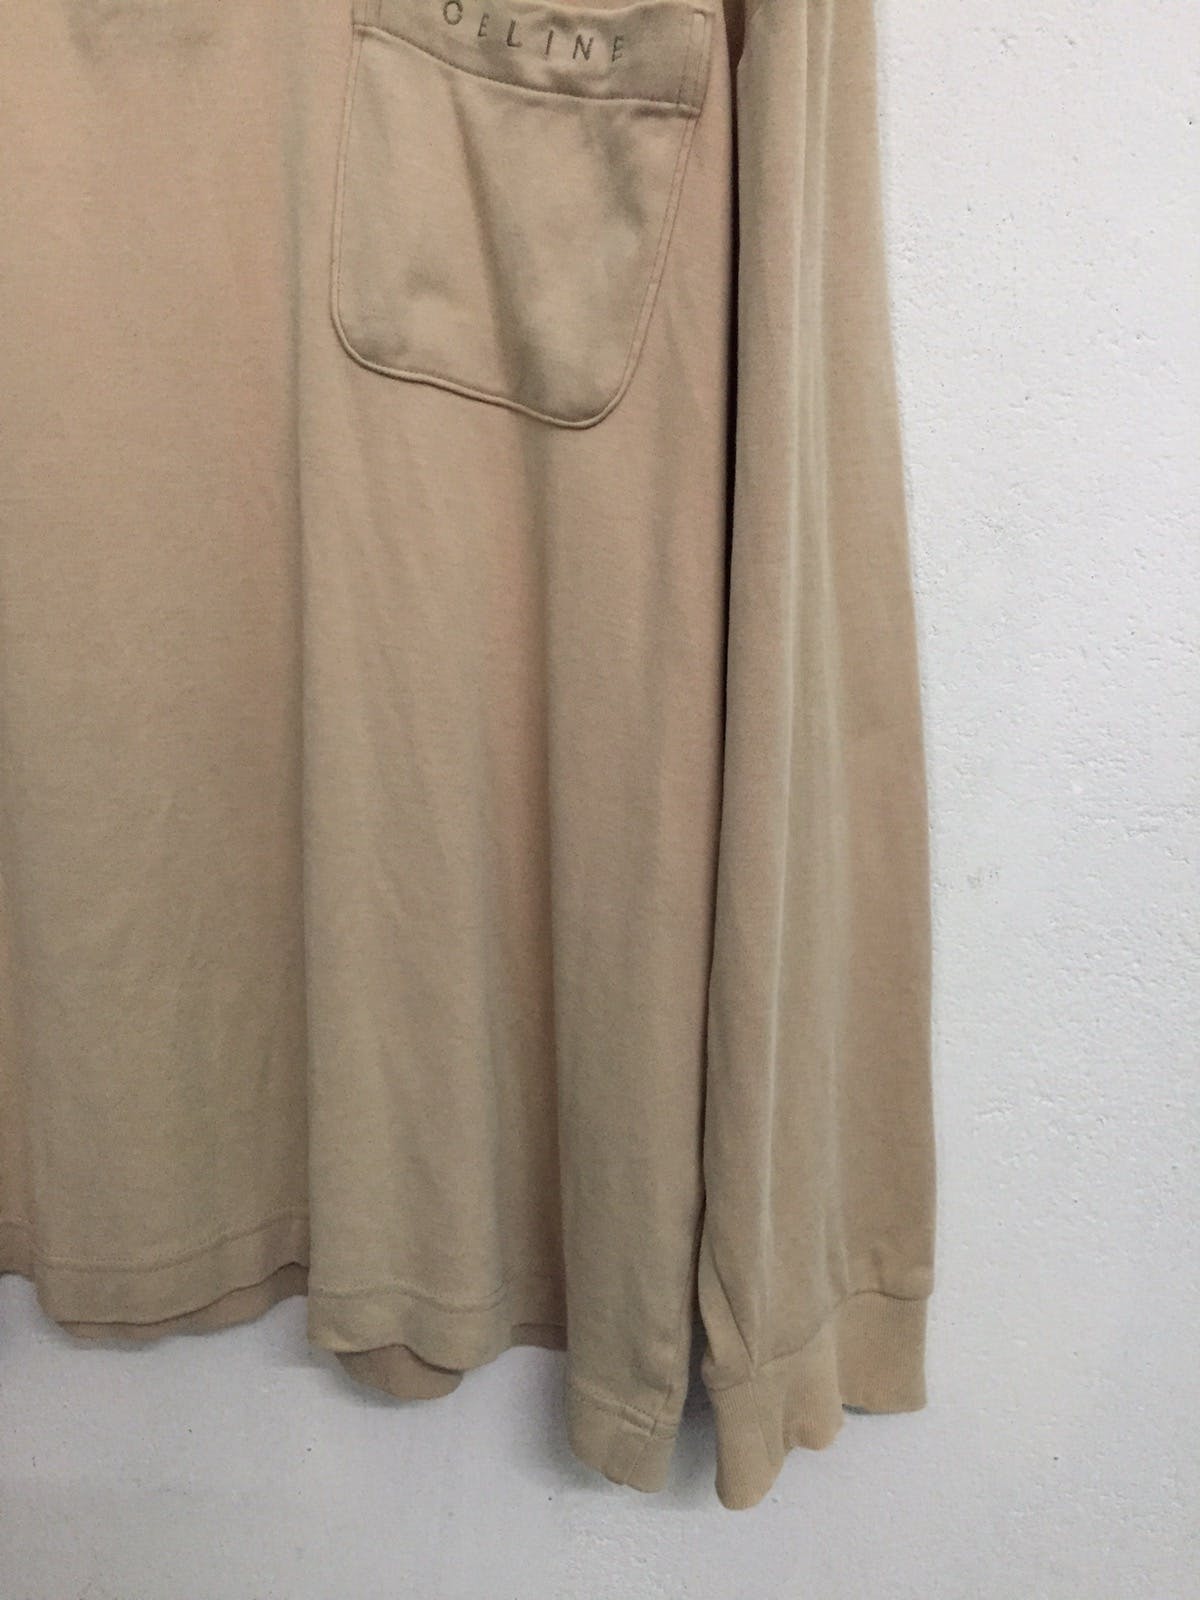 Faded CELINE Button Sweatshirt/Long Sleeve Shirt - 5